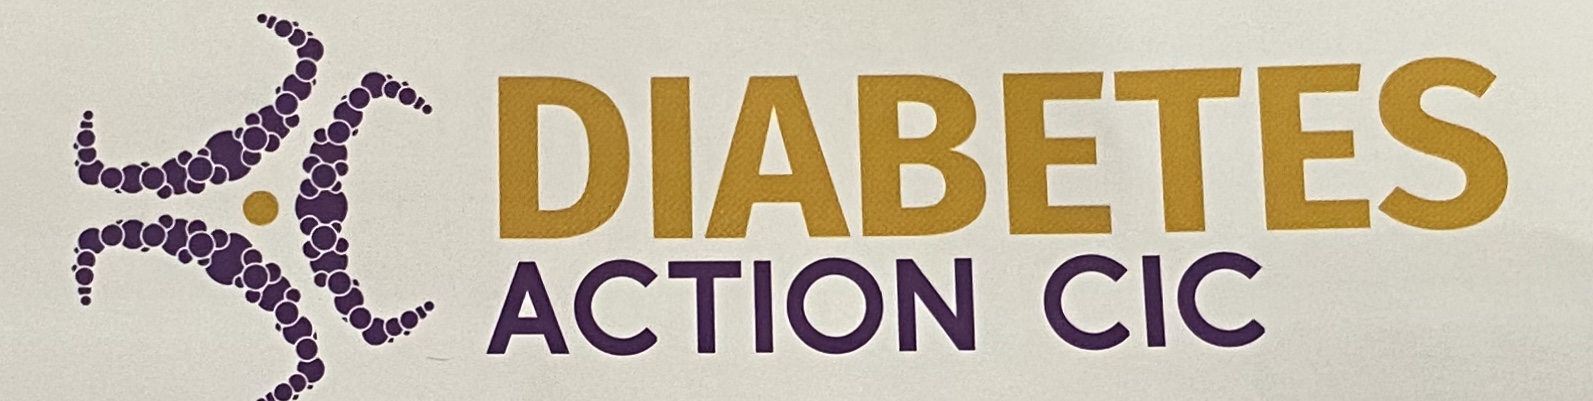 Diabetes Action CIC